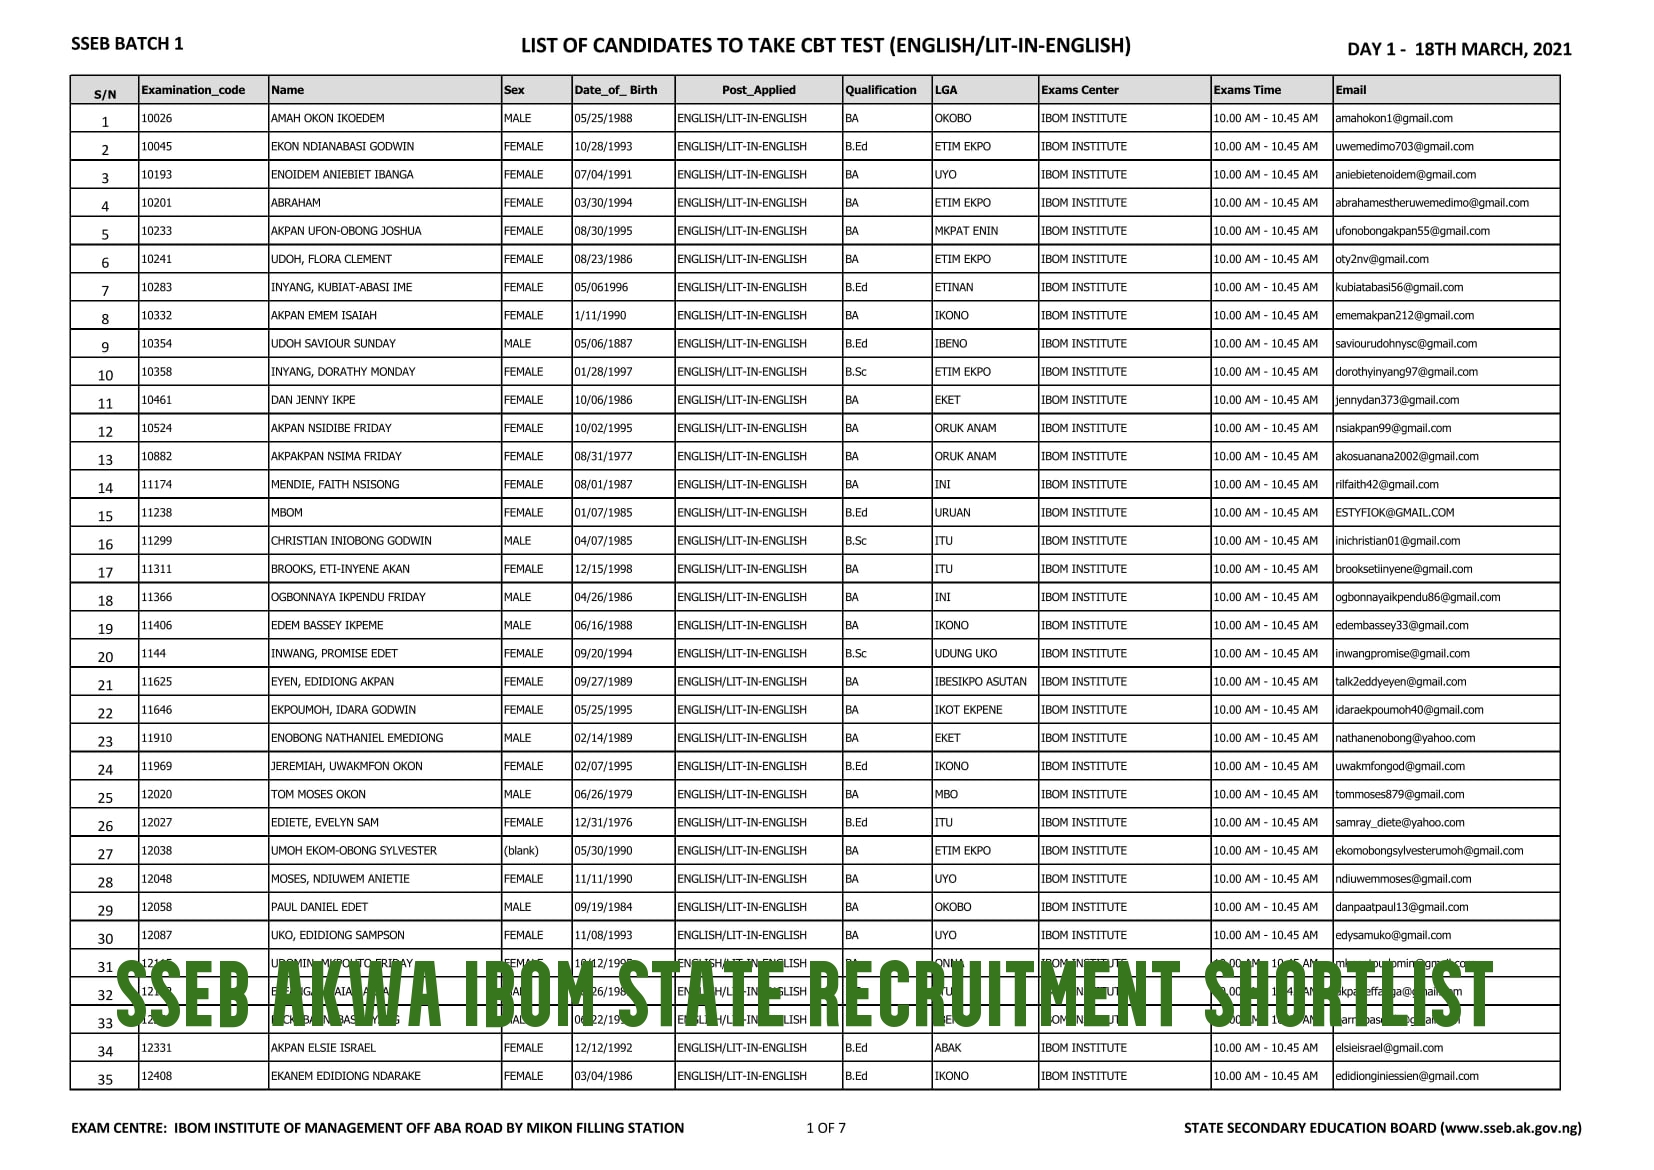 sseb Akwa Ibom State Recruitment Shortlist 